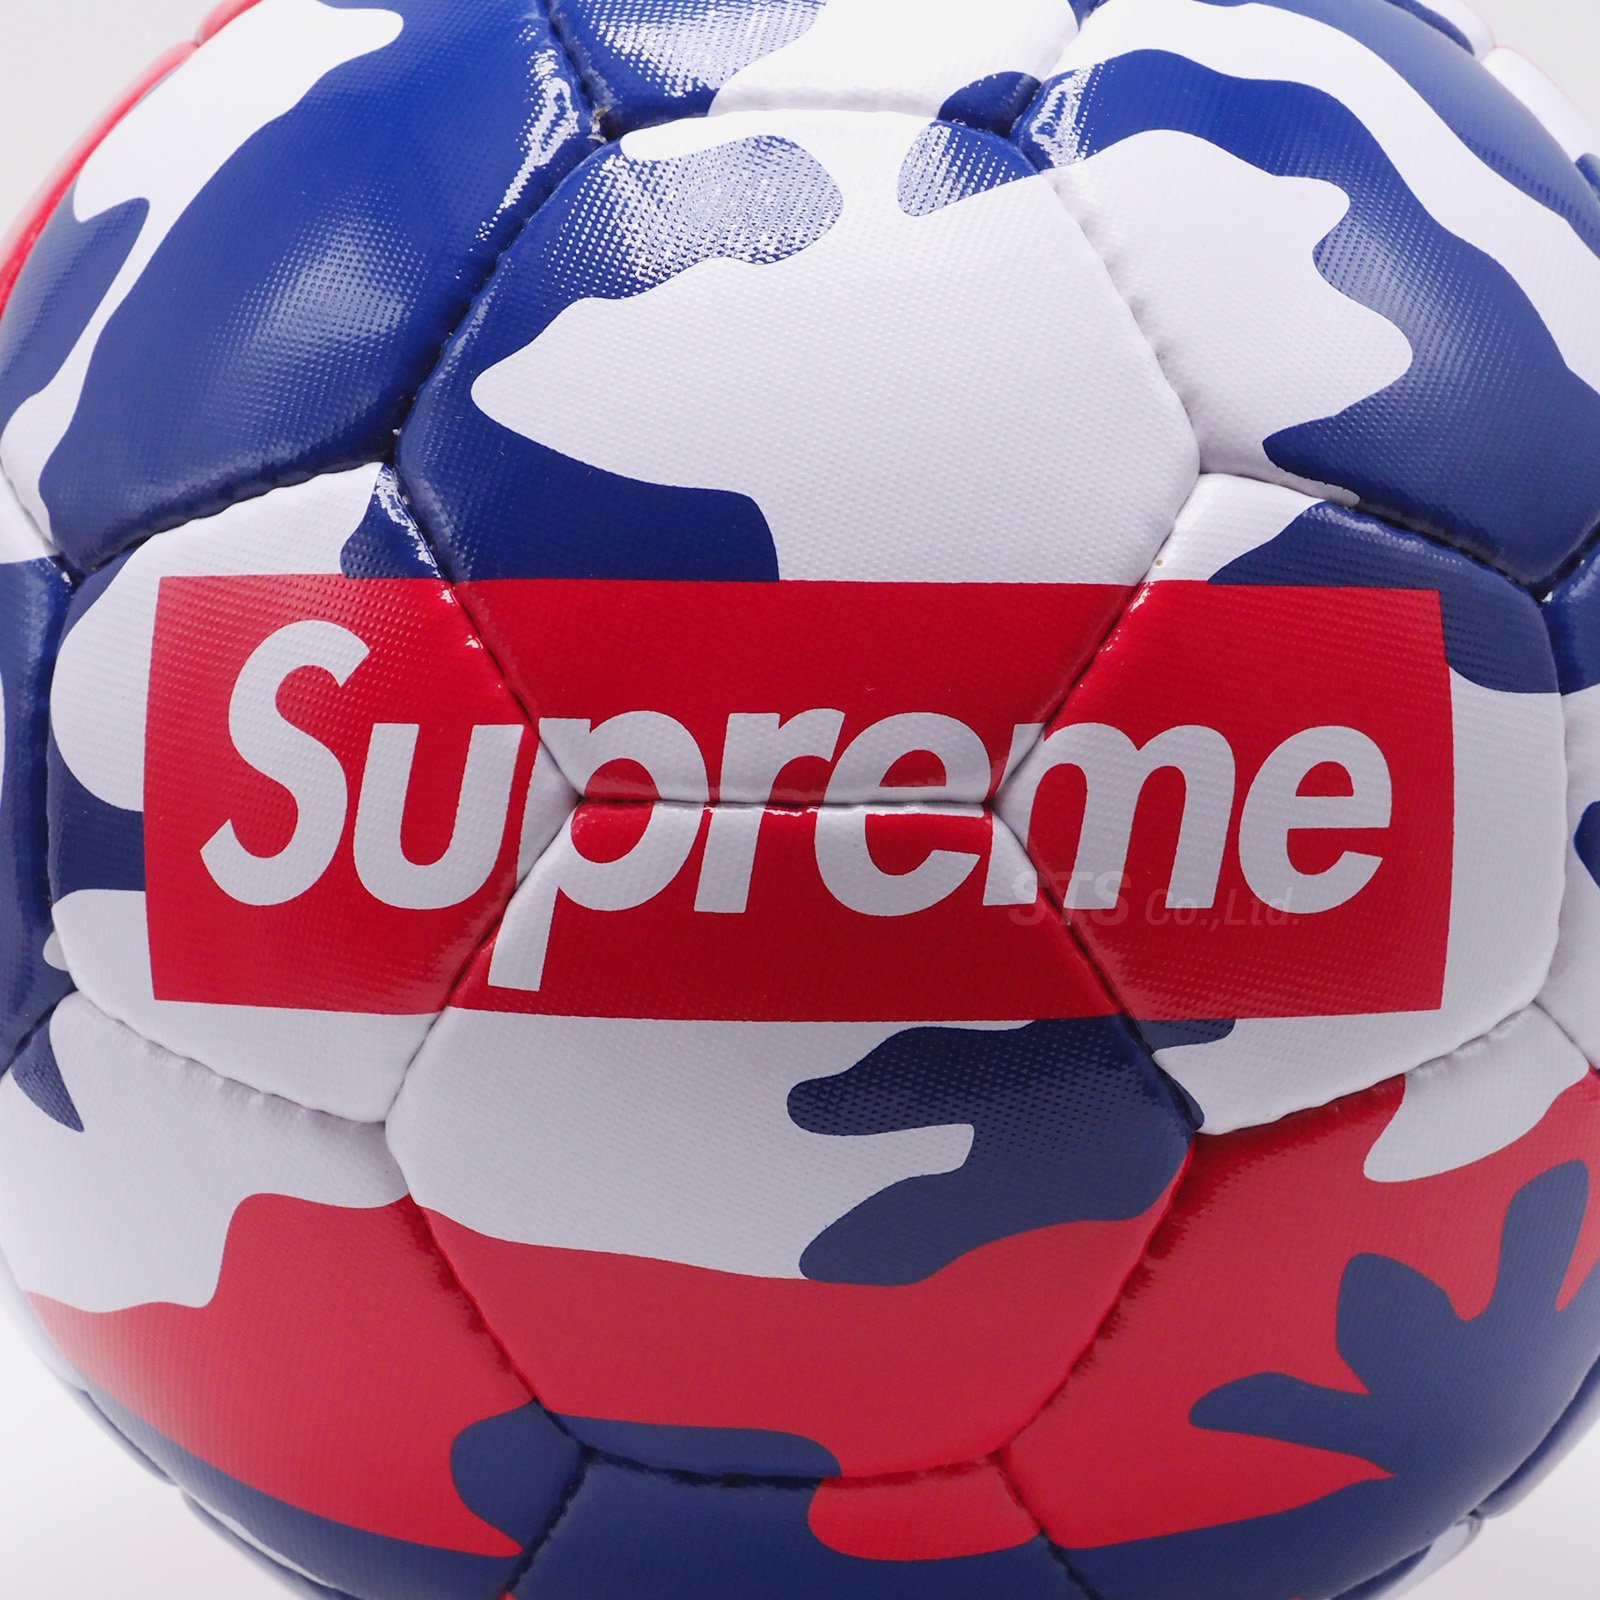 Supreme / Umbro Soccer Ball "Red Camo"